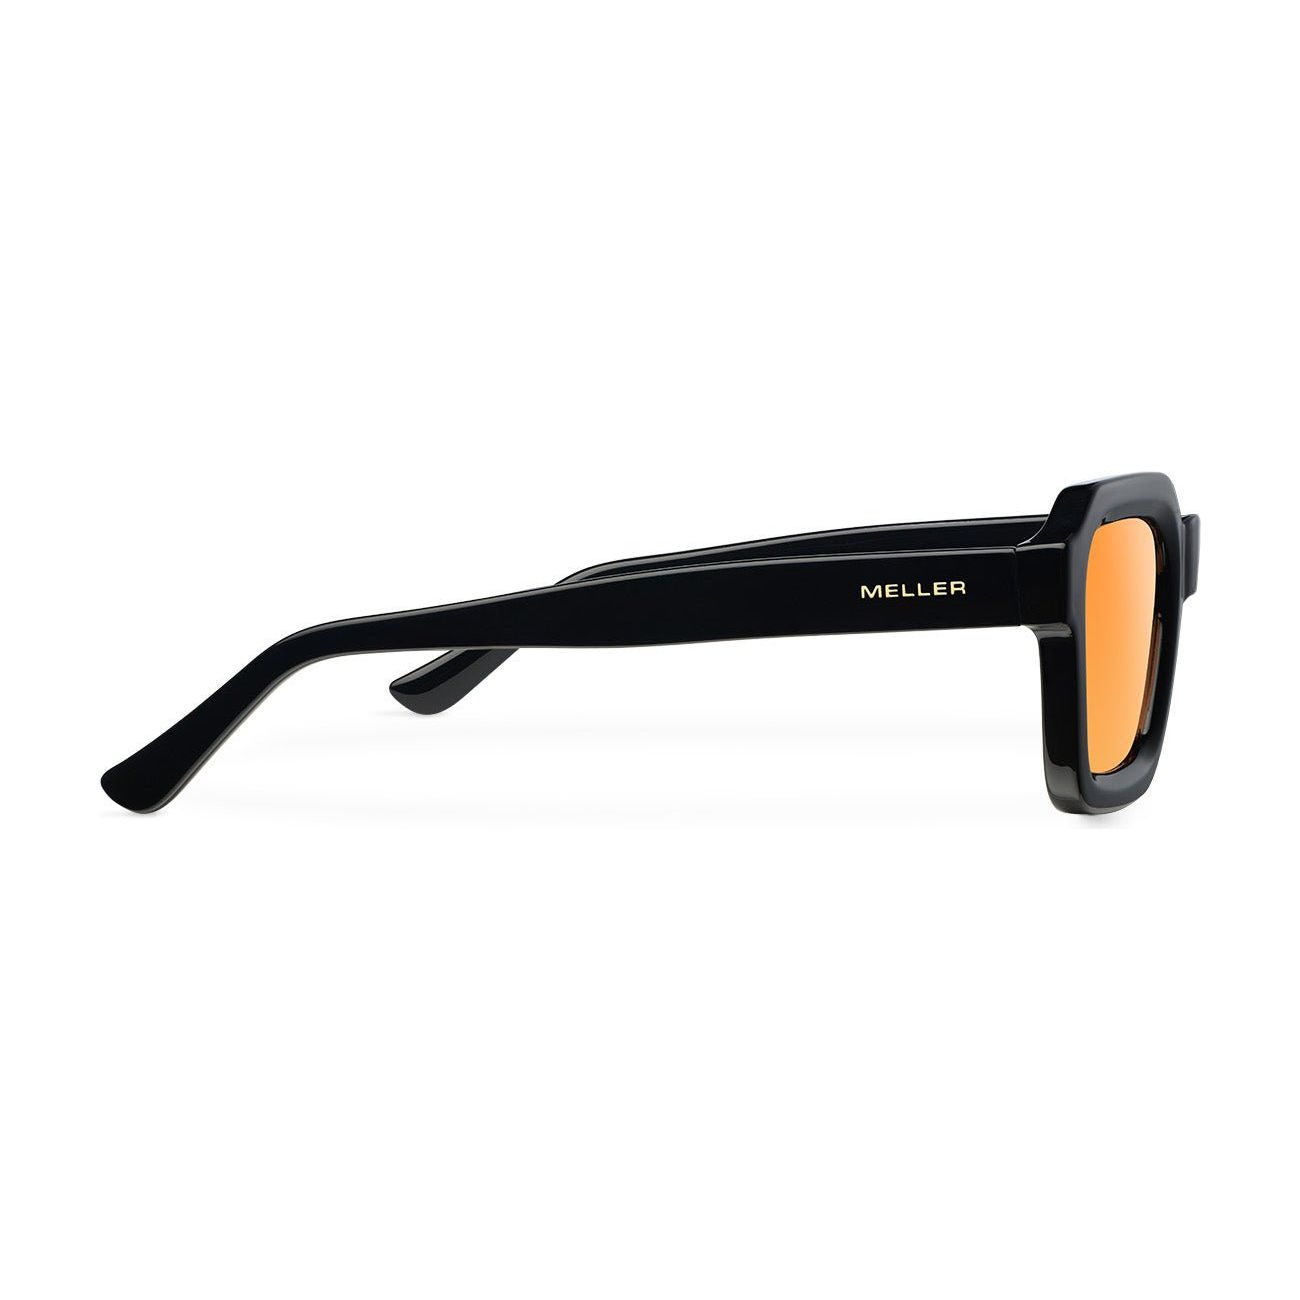 Nayah Black Orange Nayah Unisex Sunglasses: Retro-Inspired Elegance with Modern Flair by KME - KME means the very best